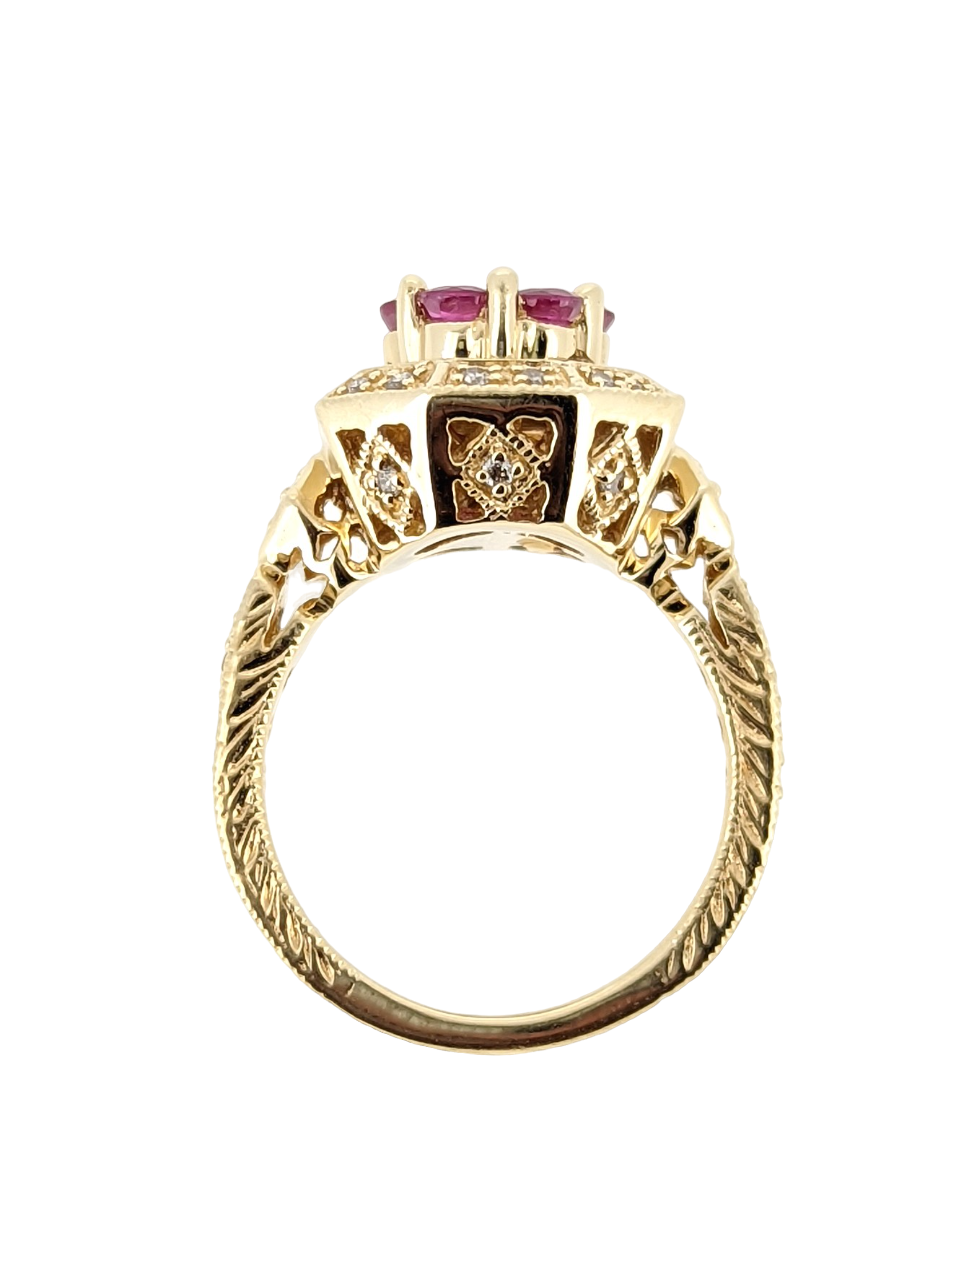 EFFY 14k Yellow Gold Diamond & Ruby Cocktail Ring Size 6.75